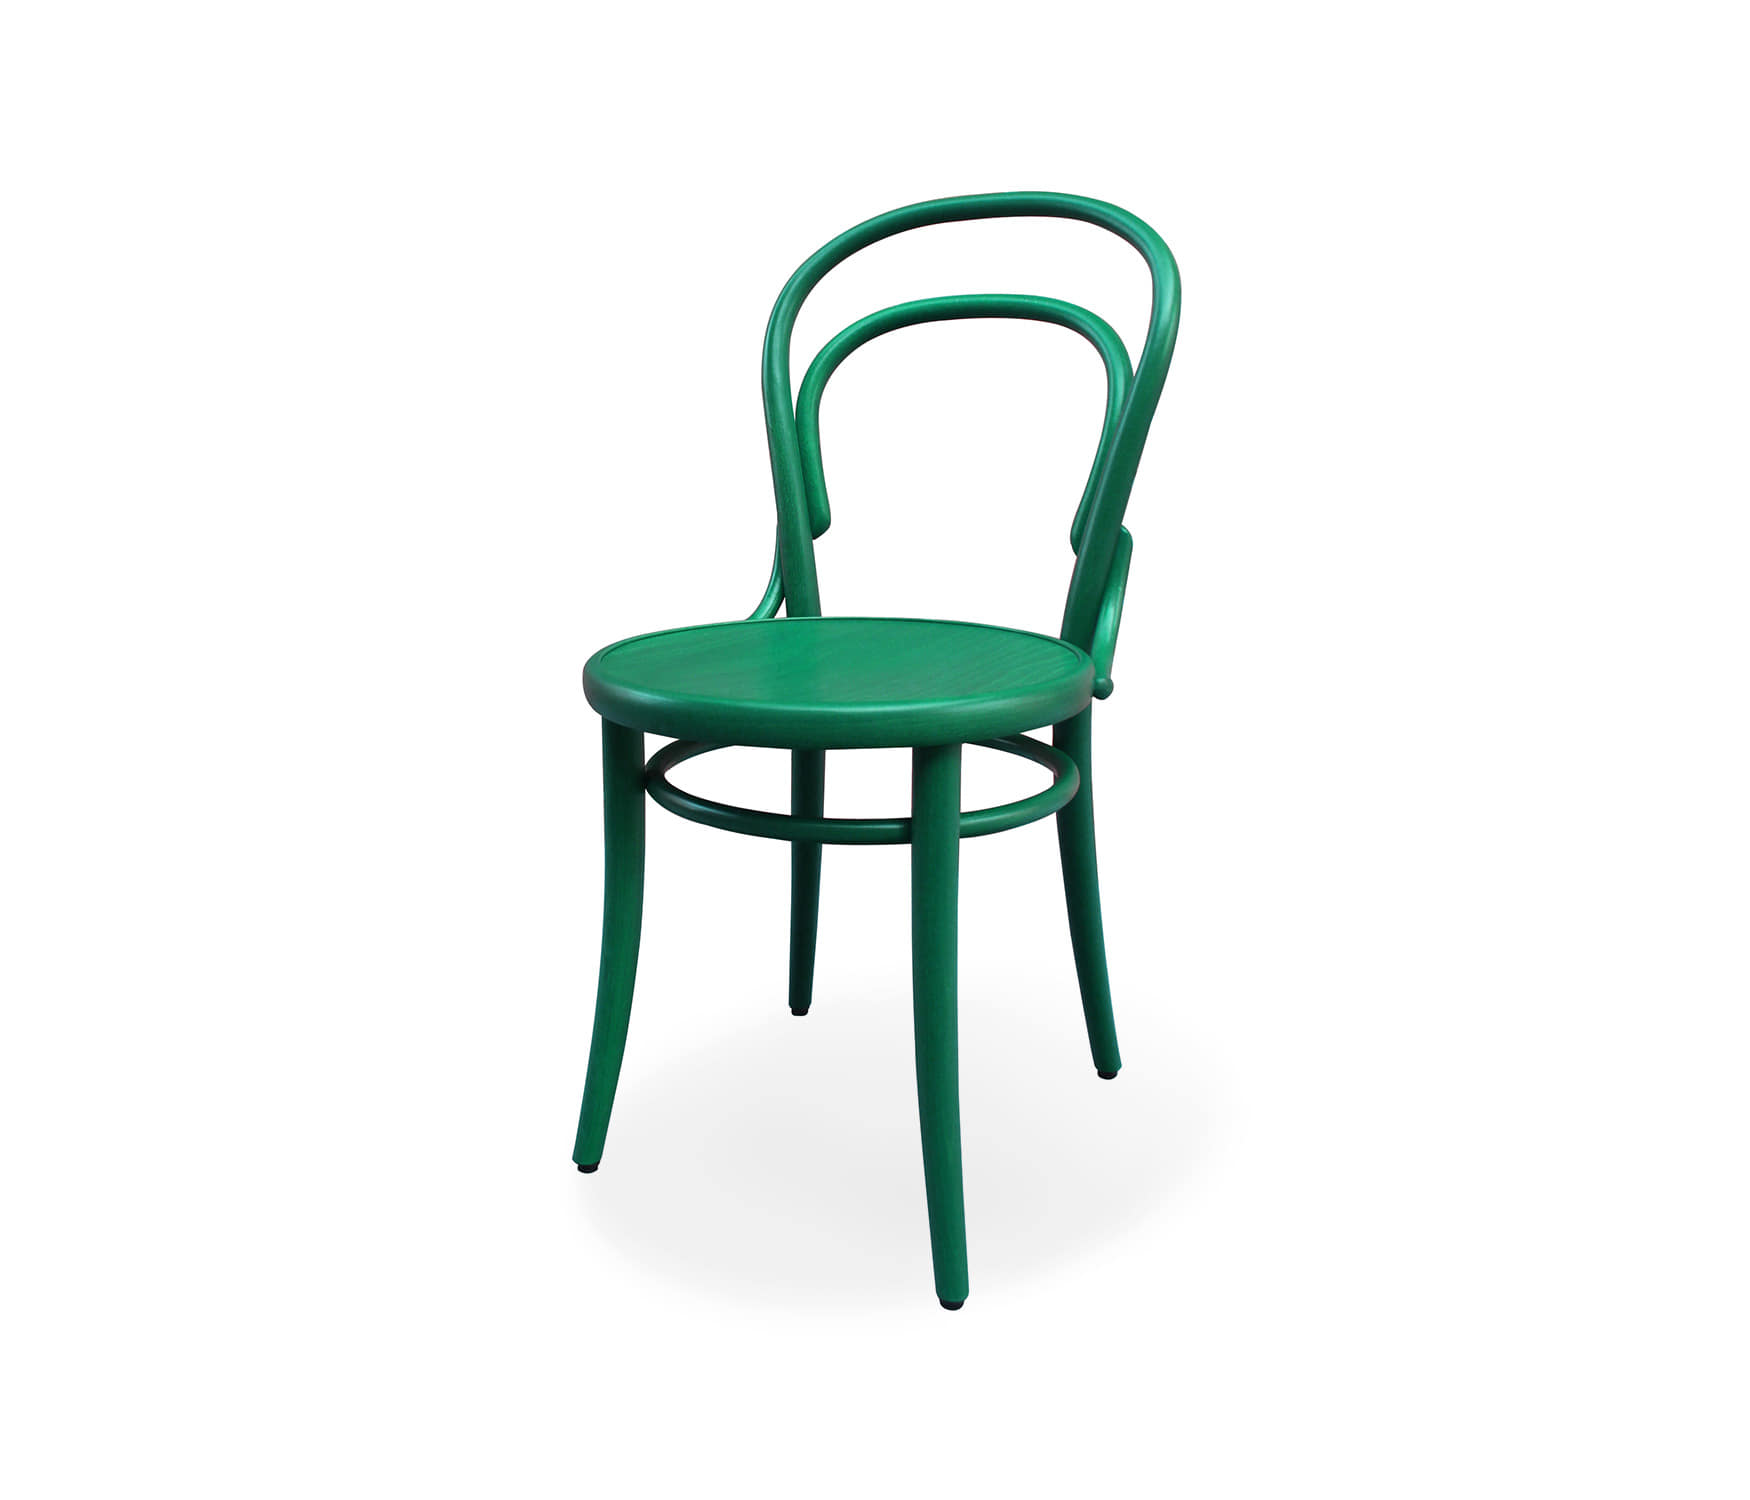 Chair 14 - Green